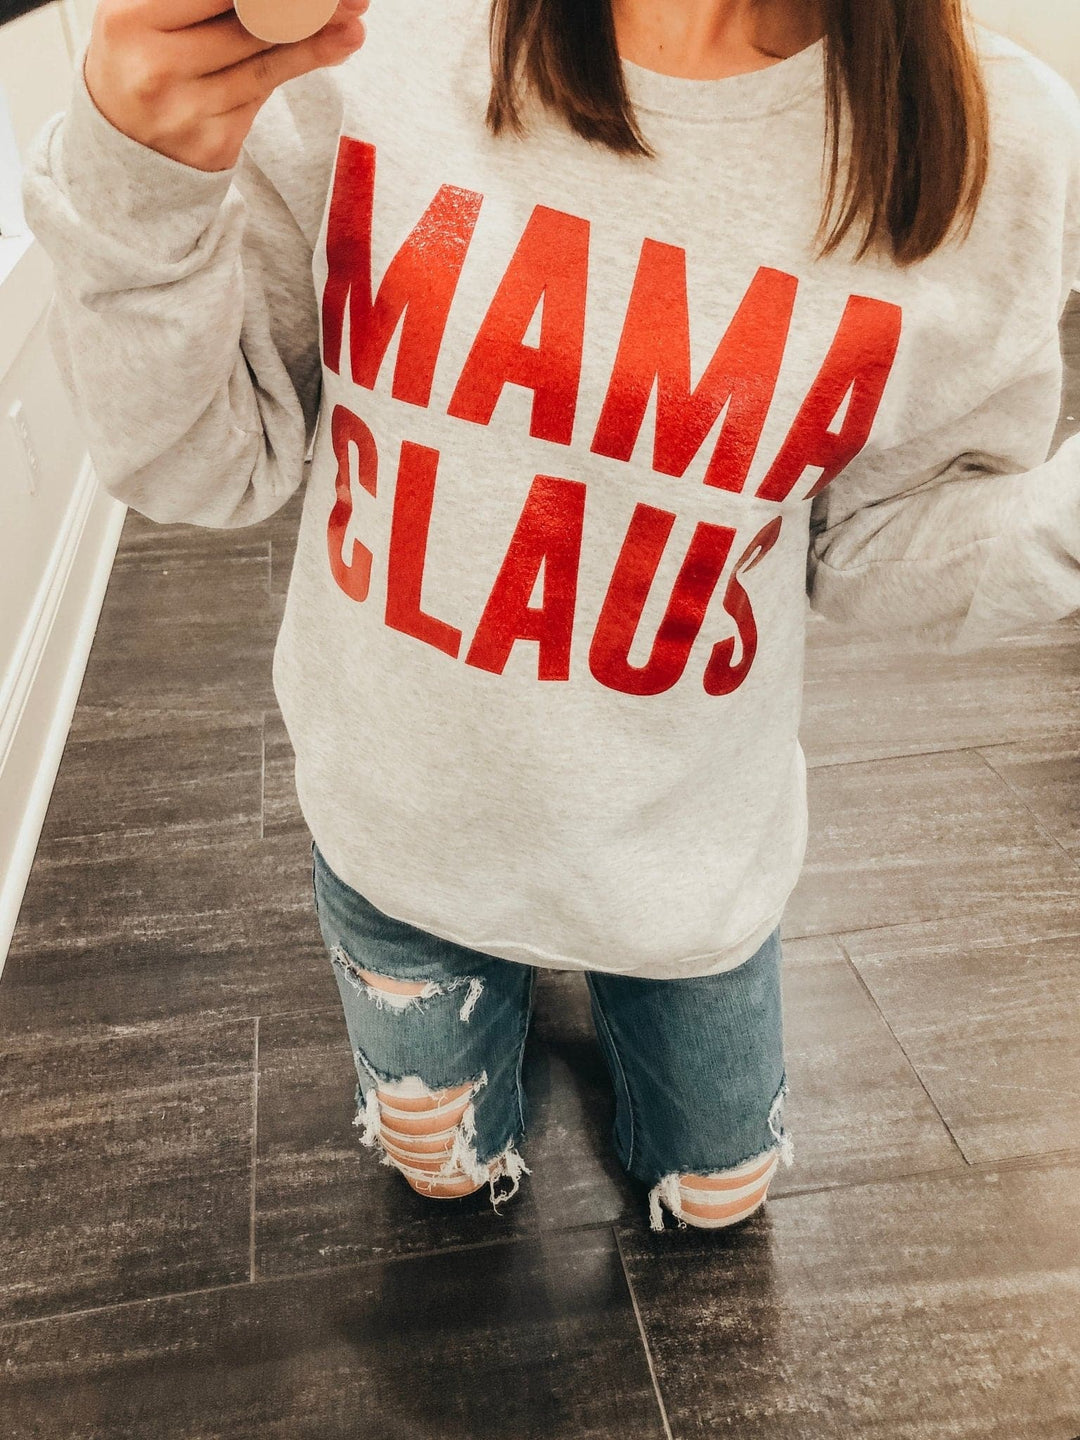 Mama Claus Sweatshirt w/ Red Glitter Print